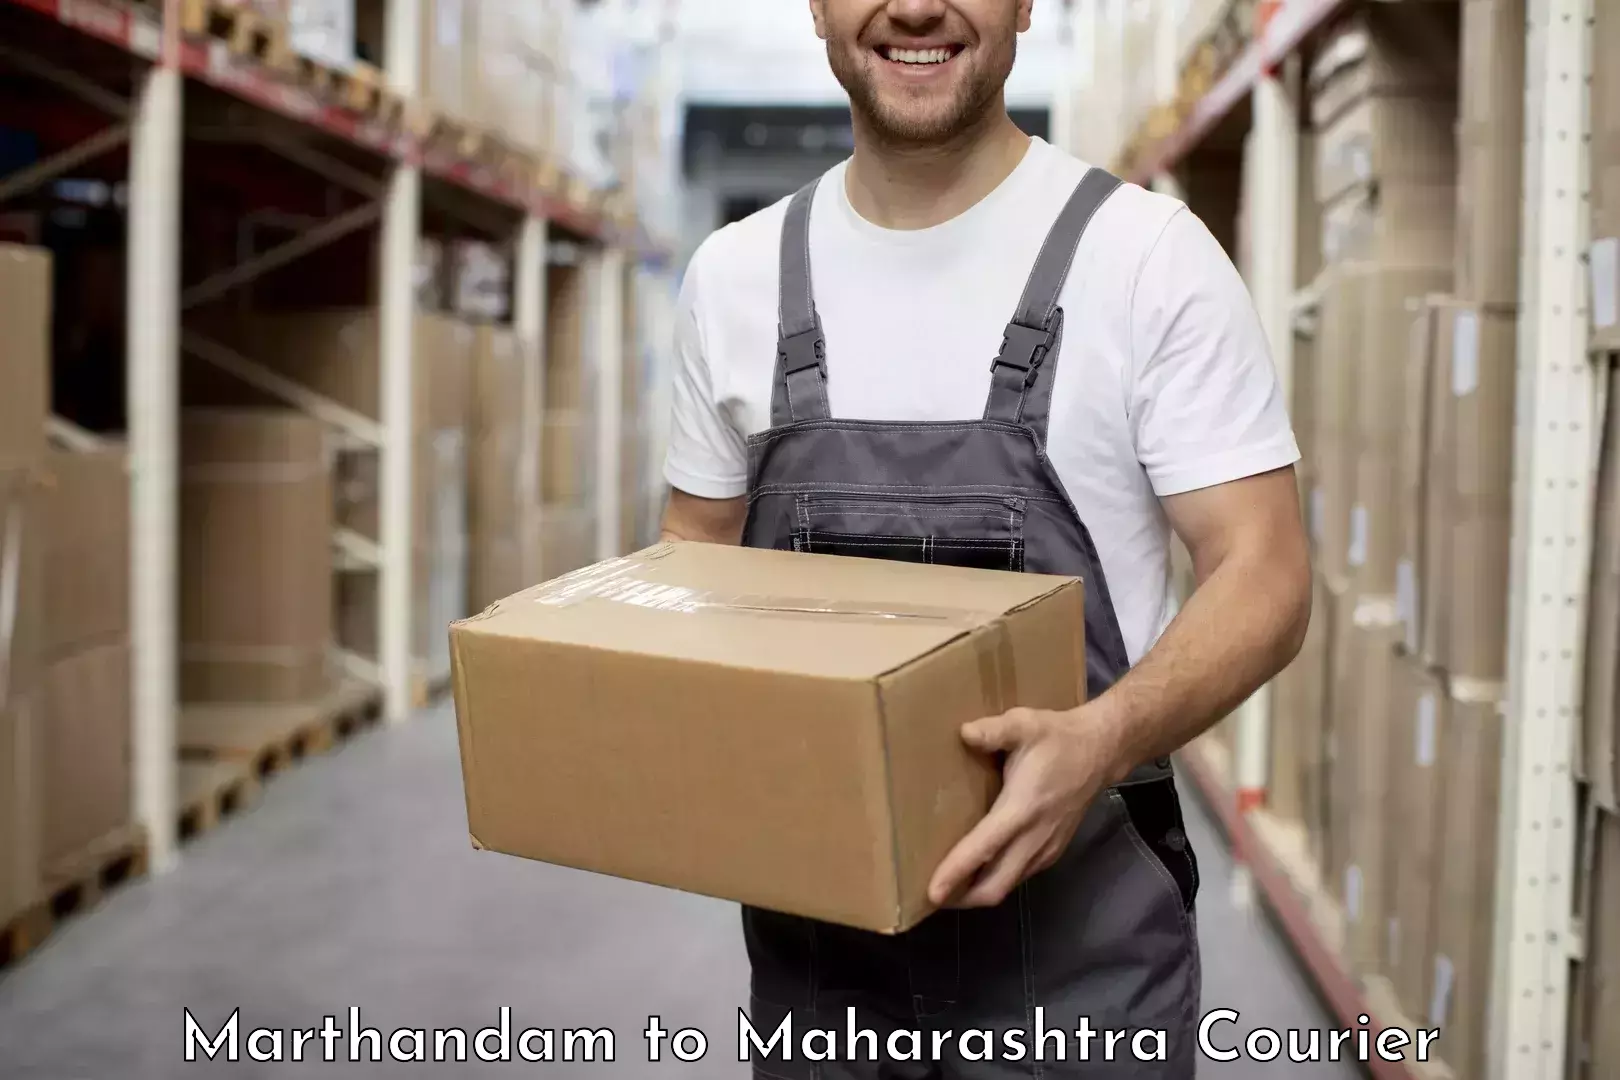 Express delivery capabilities Marthandam to Nashik